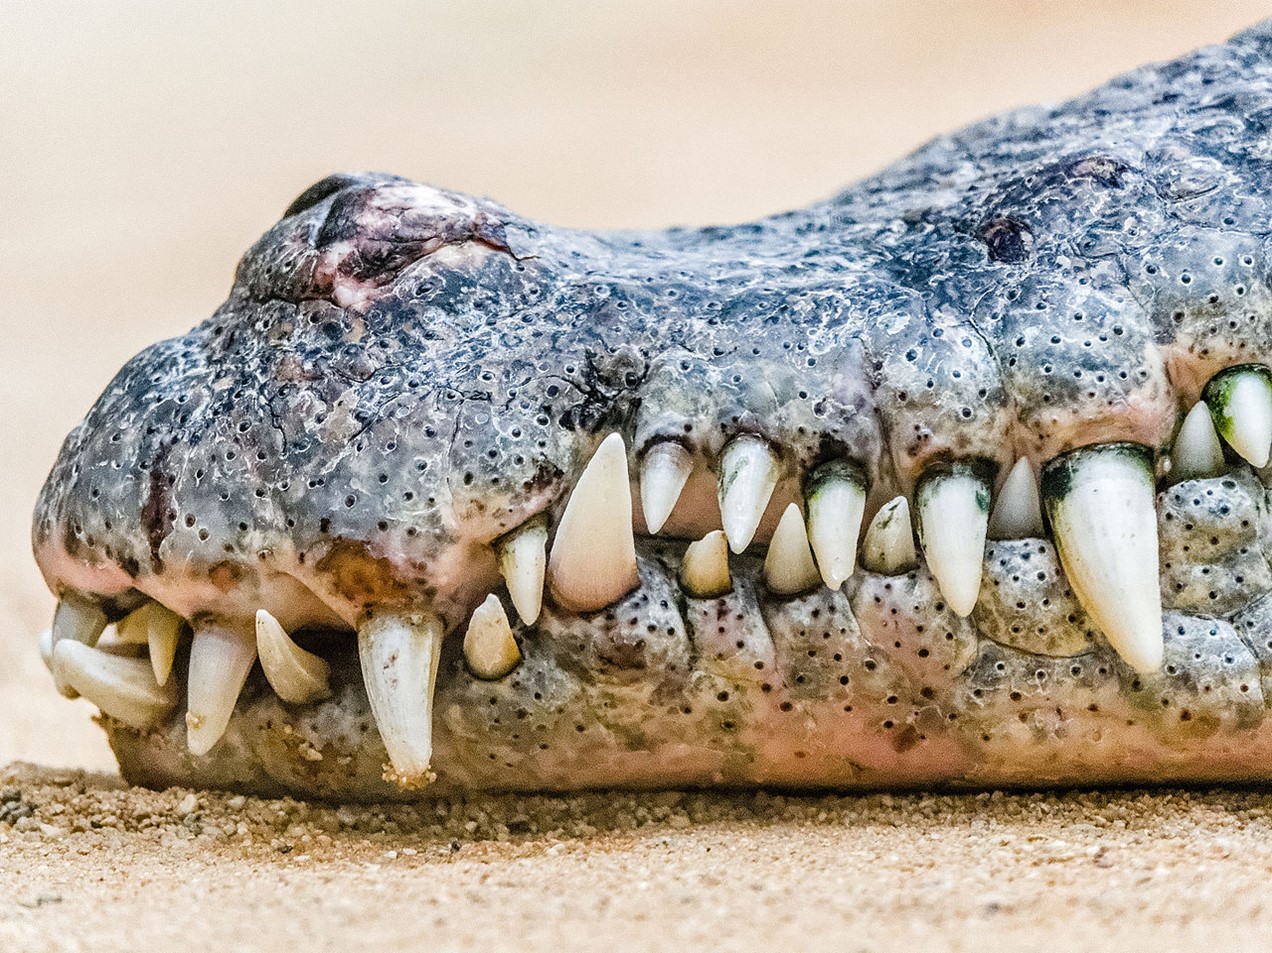 The exposed teeth of a Nile crocodile